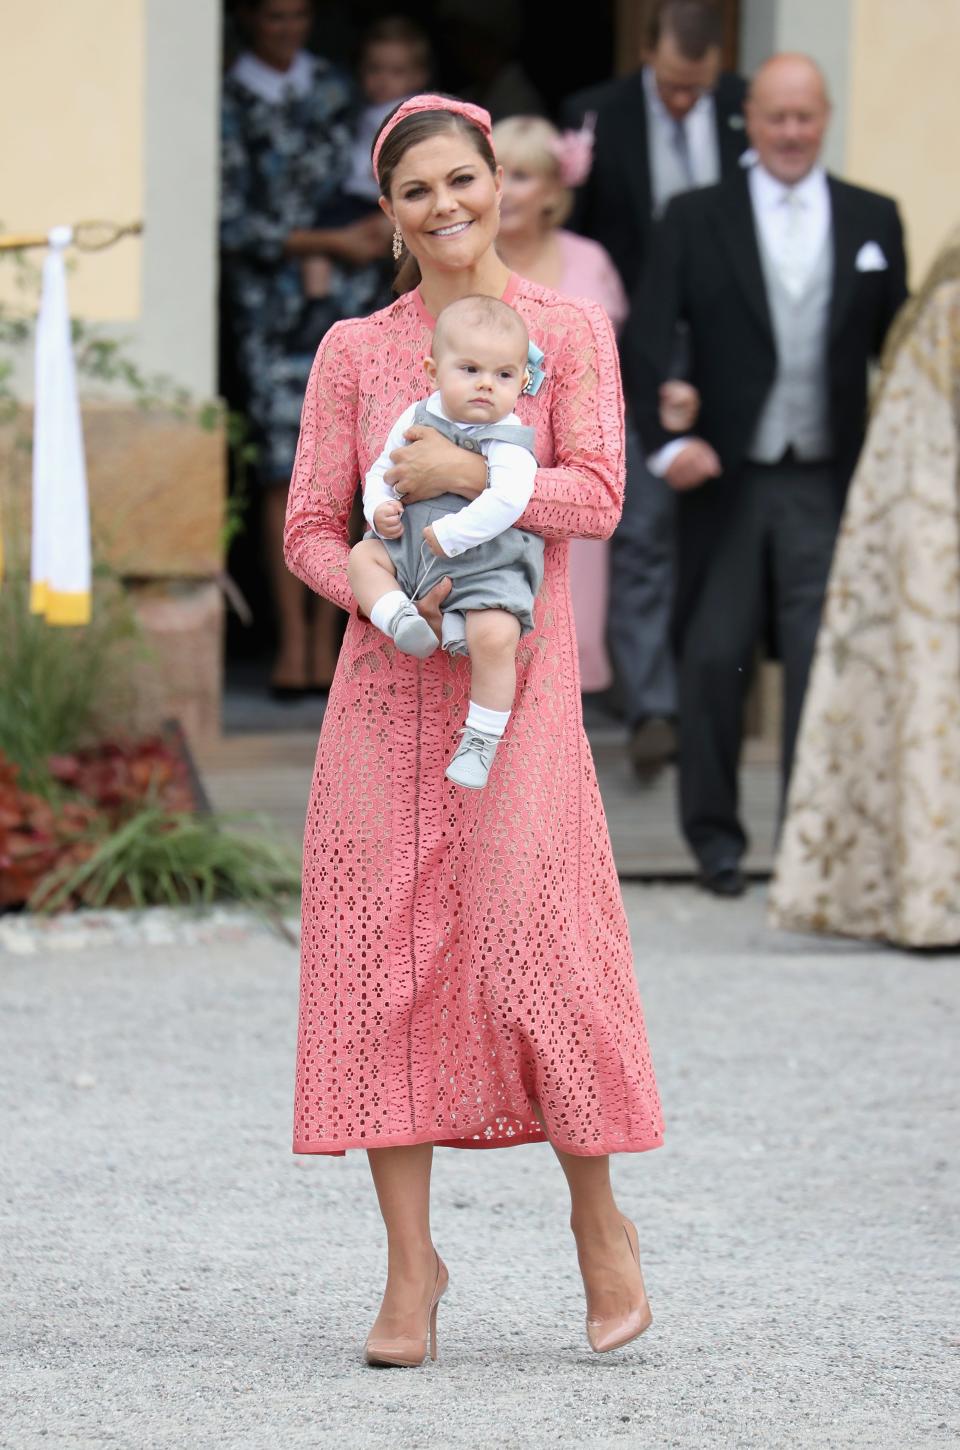 Crown Princess Victoria of Sweden wears a pink dress